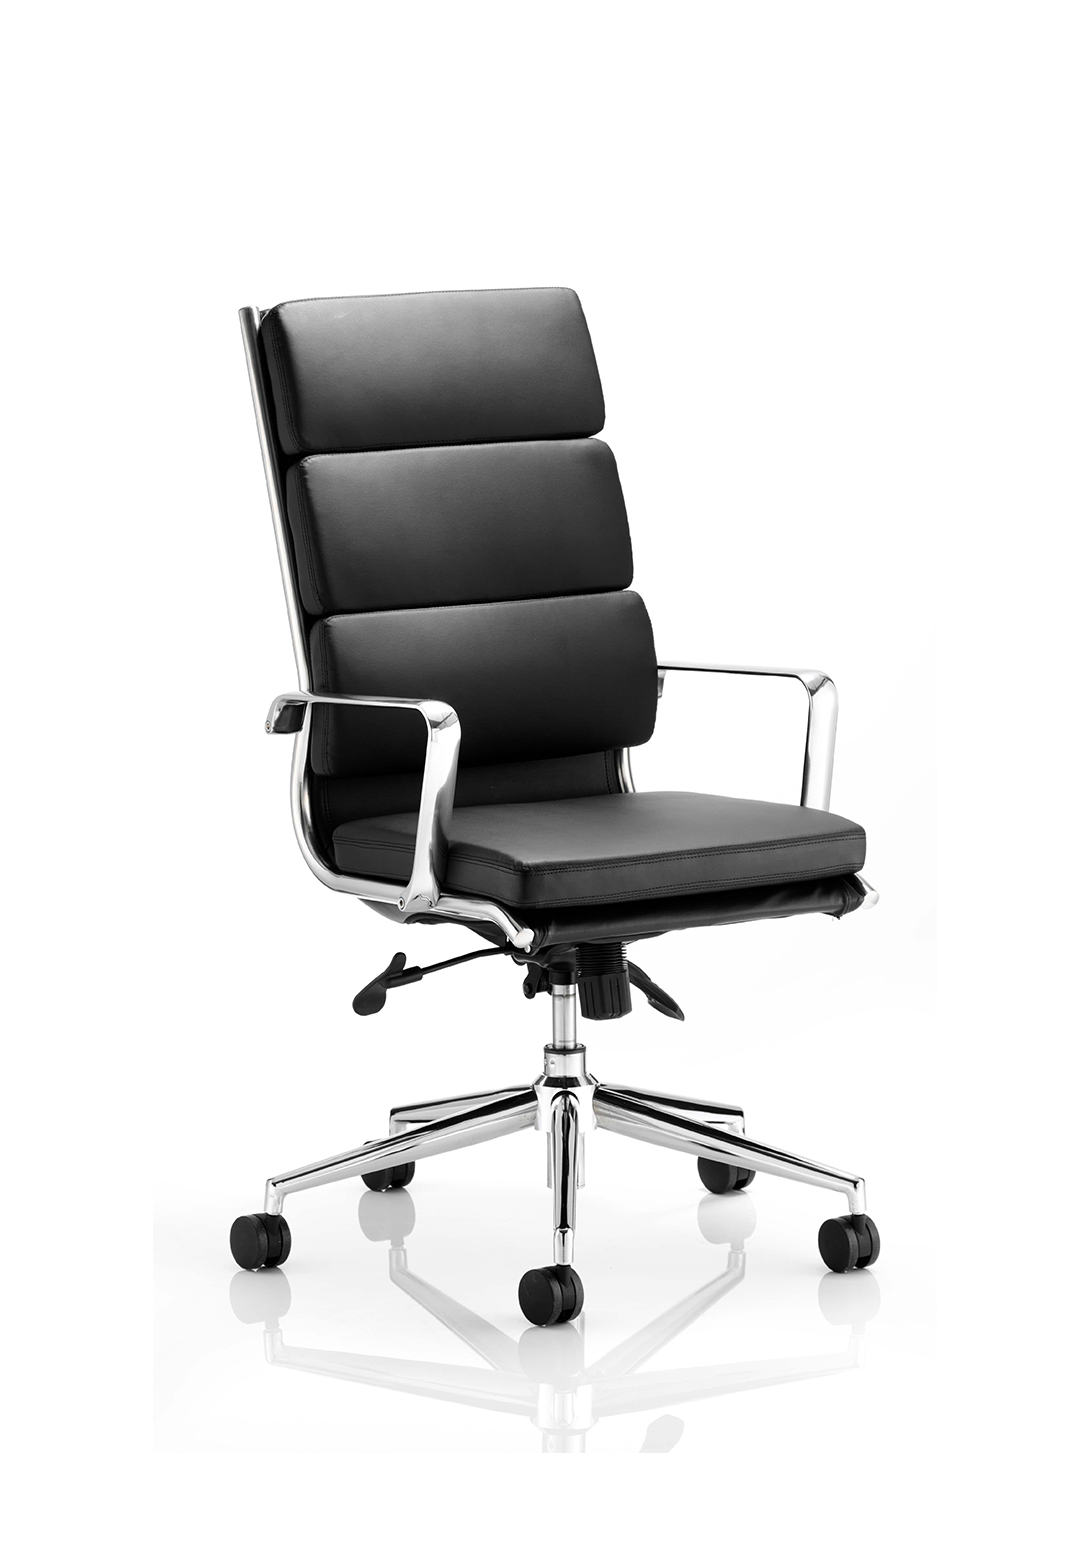 Savoy Exec Home Office Chair | Executive Chair | Home Office Furniture | Leather Home Office Chair | Leather Executive Chair | Swivel Chair | Swivel Executive Chair